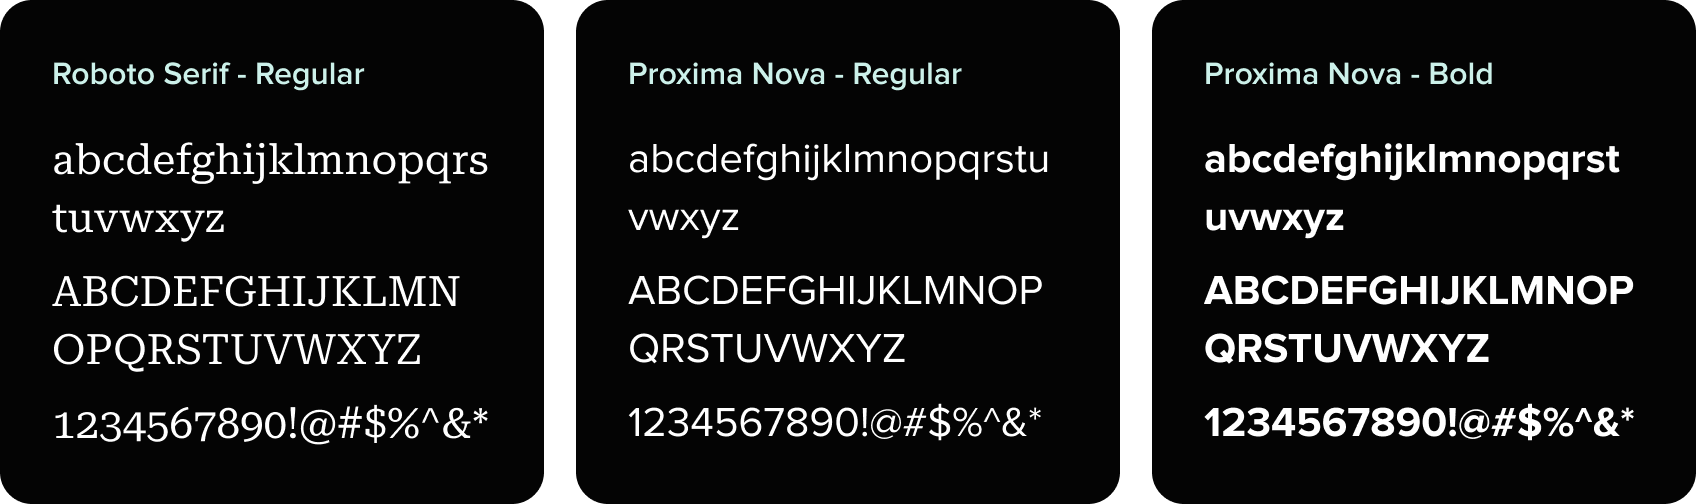 Small type specs showing Roboto serif regular, Proxima Nova Regular, Proxima Nova Bold